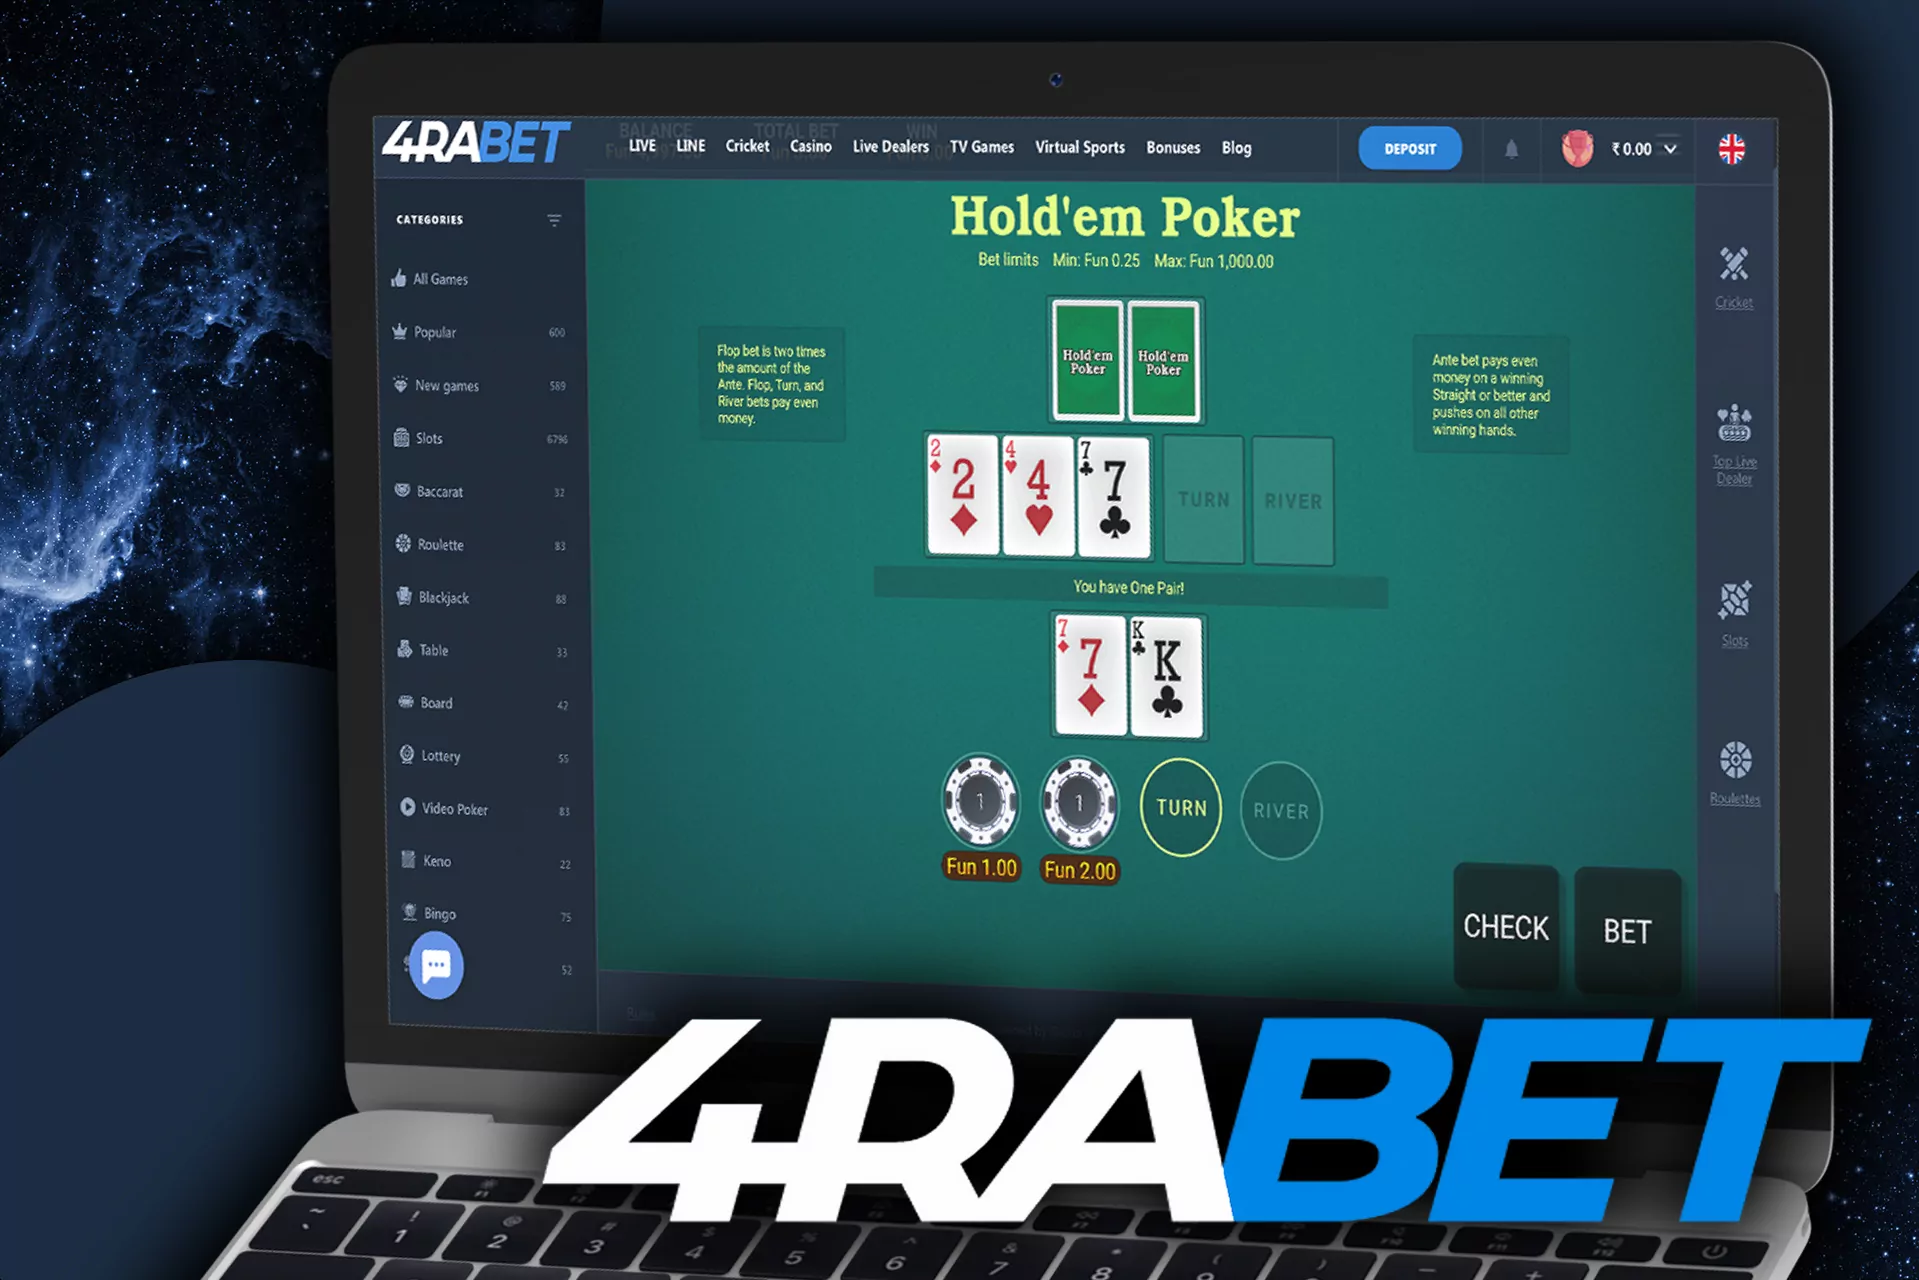 Play online poker in the 4rabet casino.